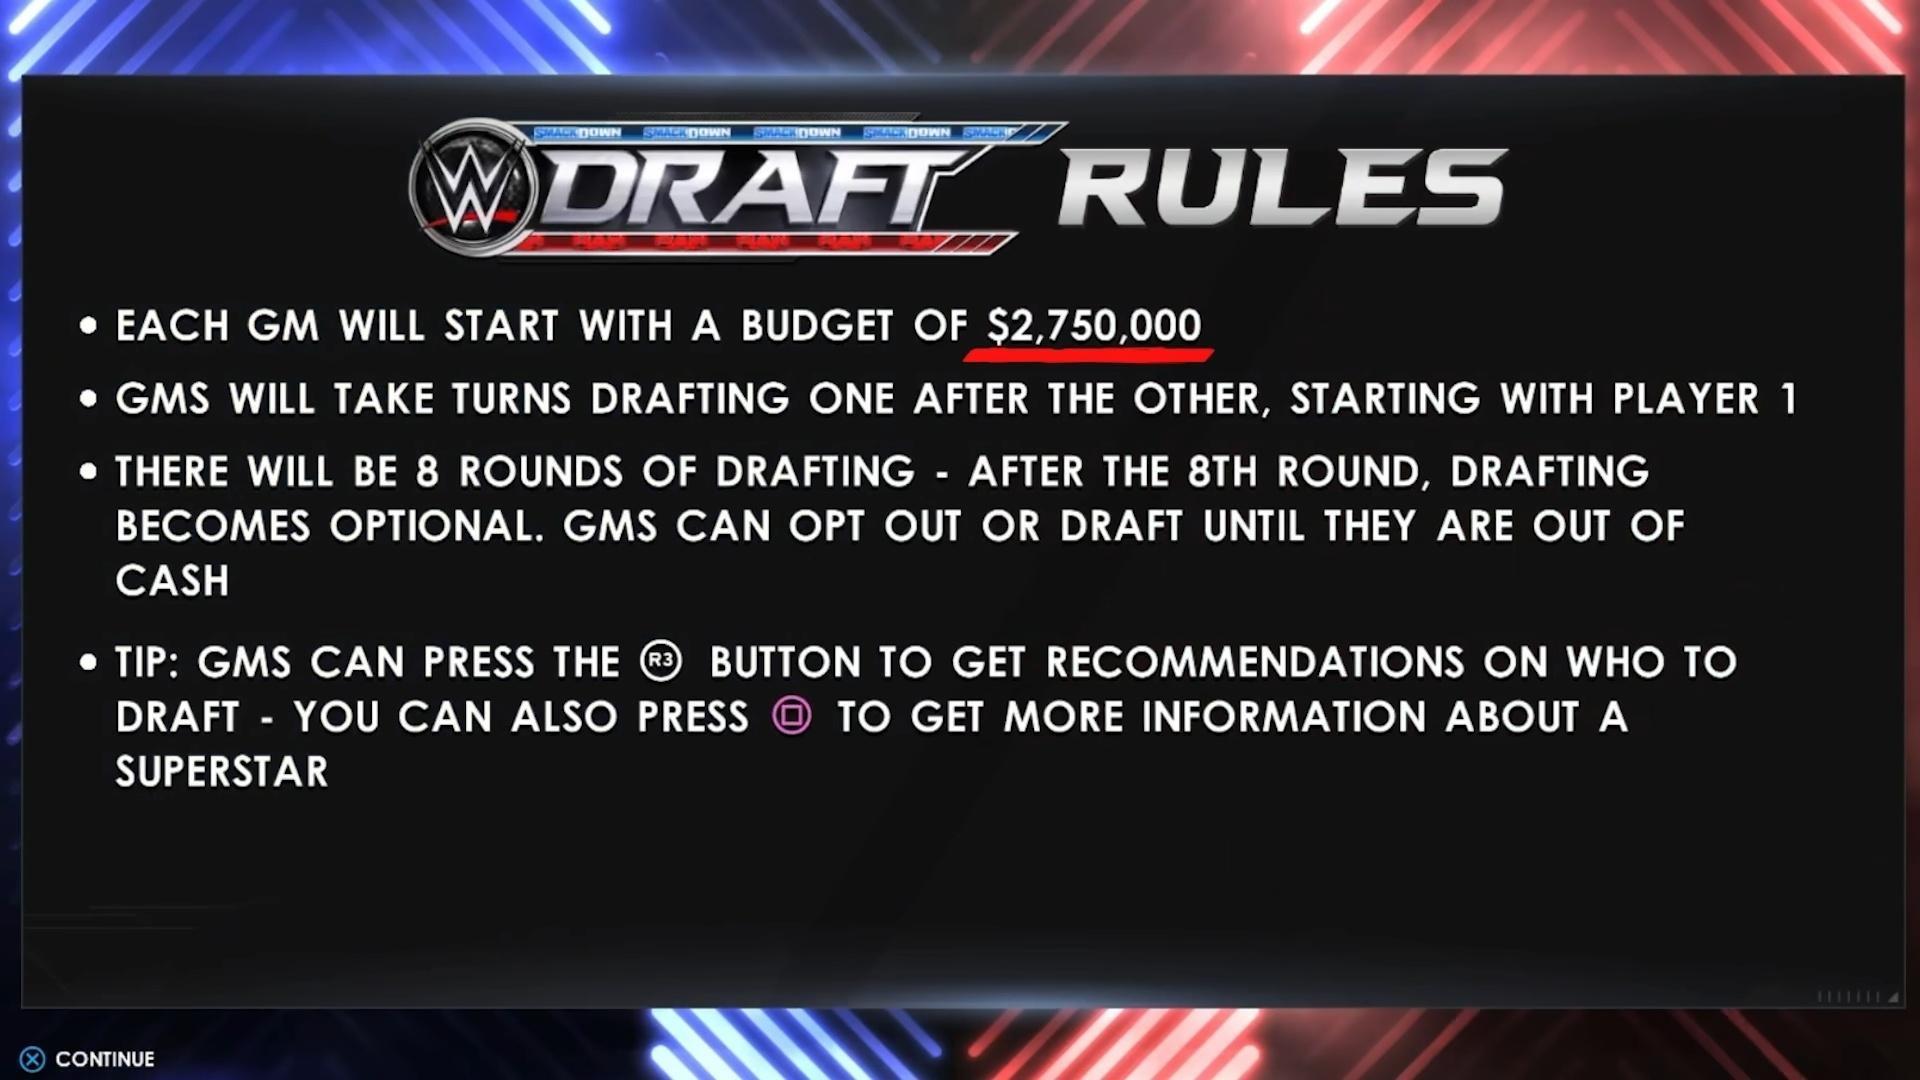 WWE 2K22 Match Types: Full List, Custom Rules & Weapons